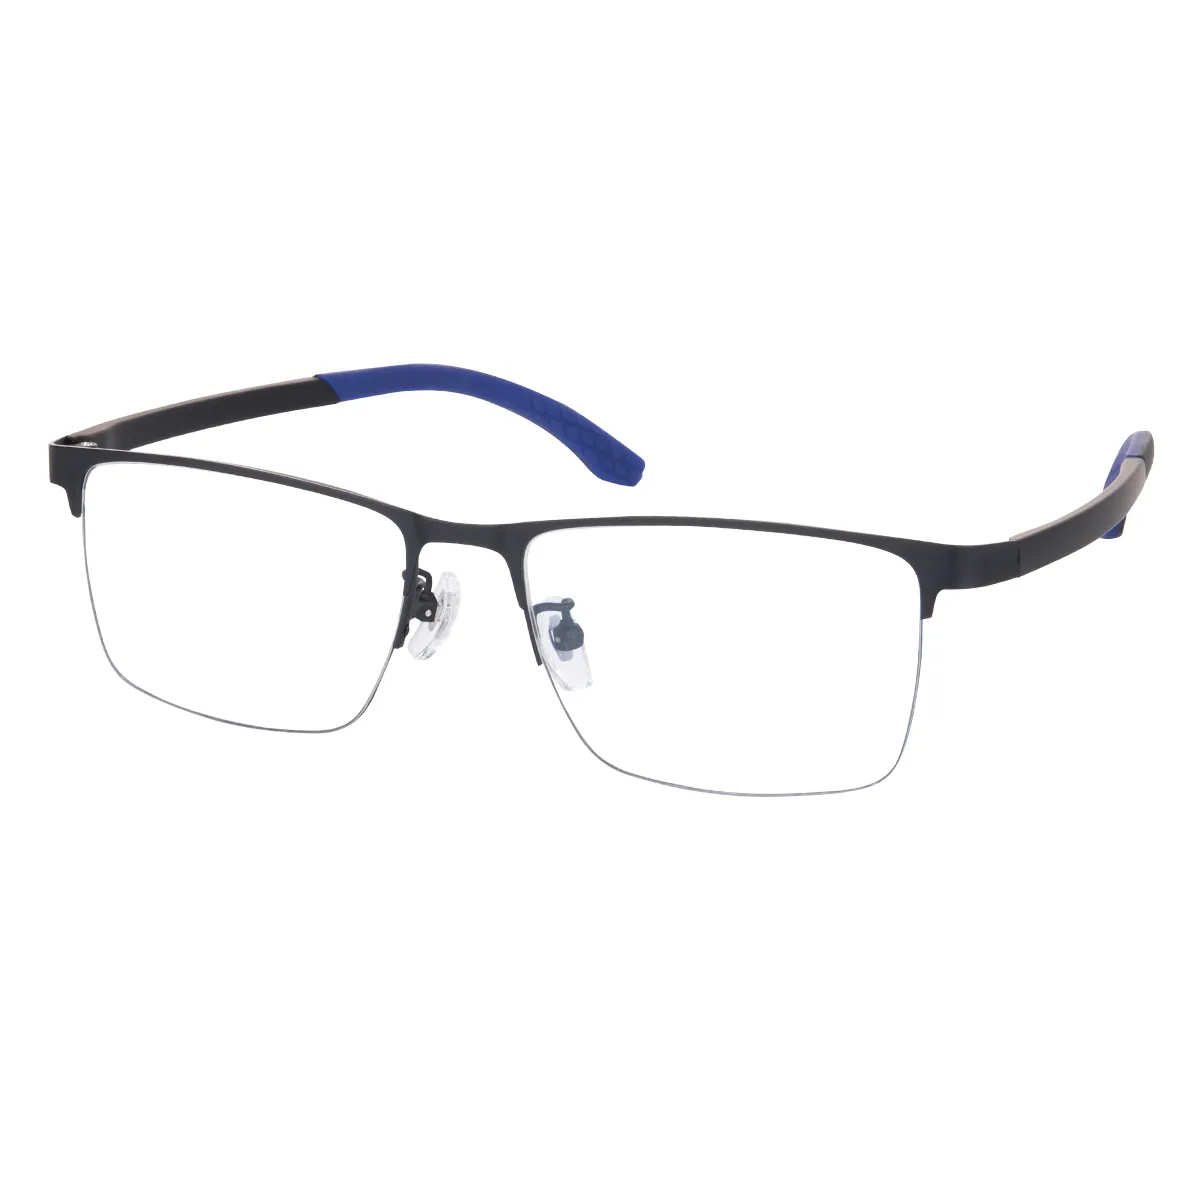 Kevin - Square Blue Glasses for Men